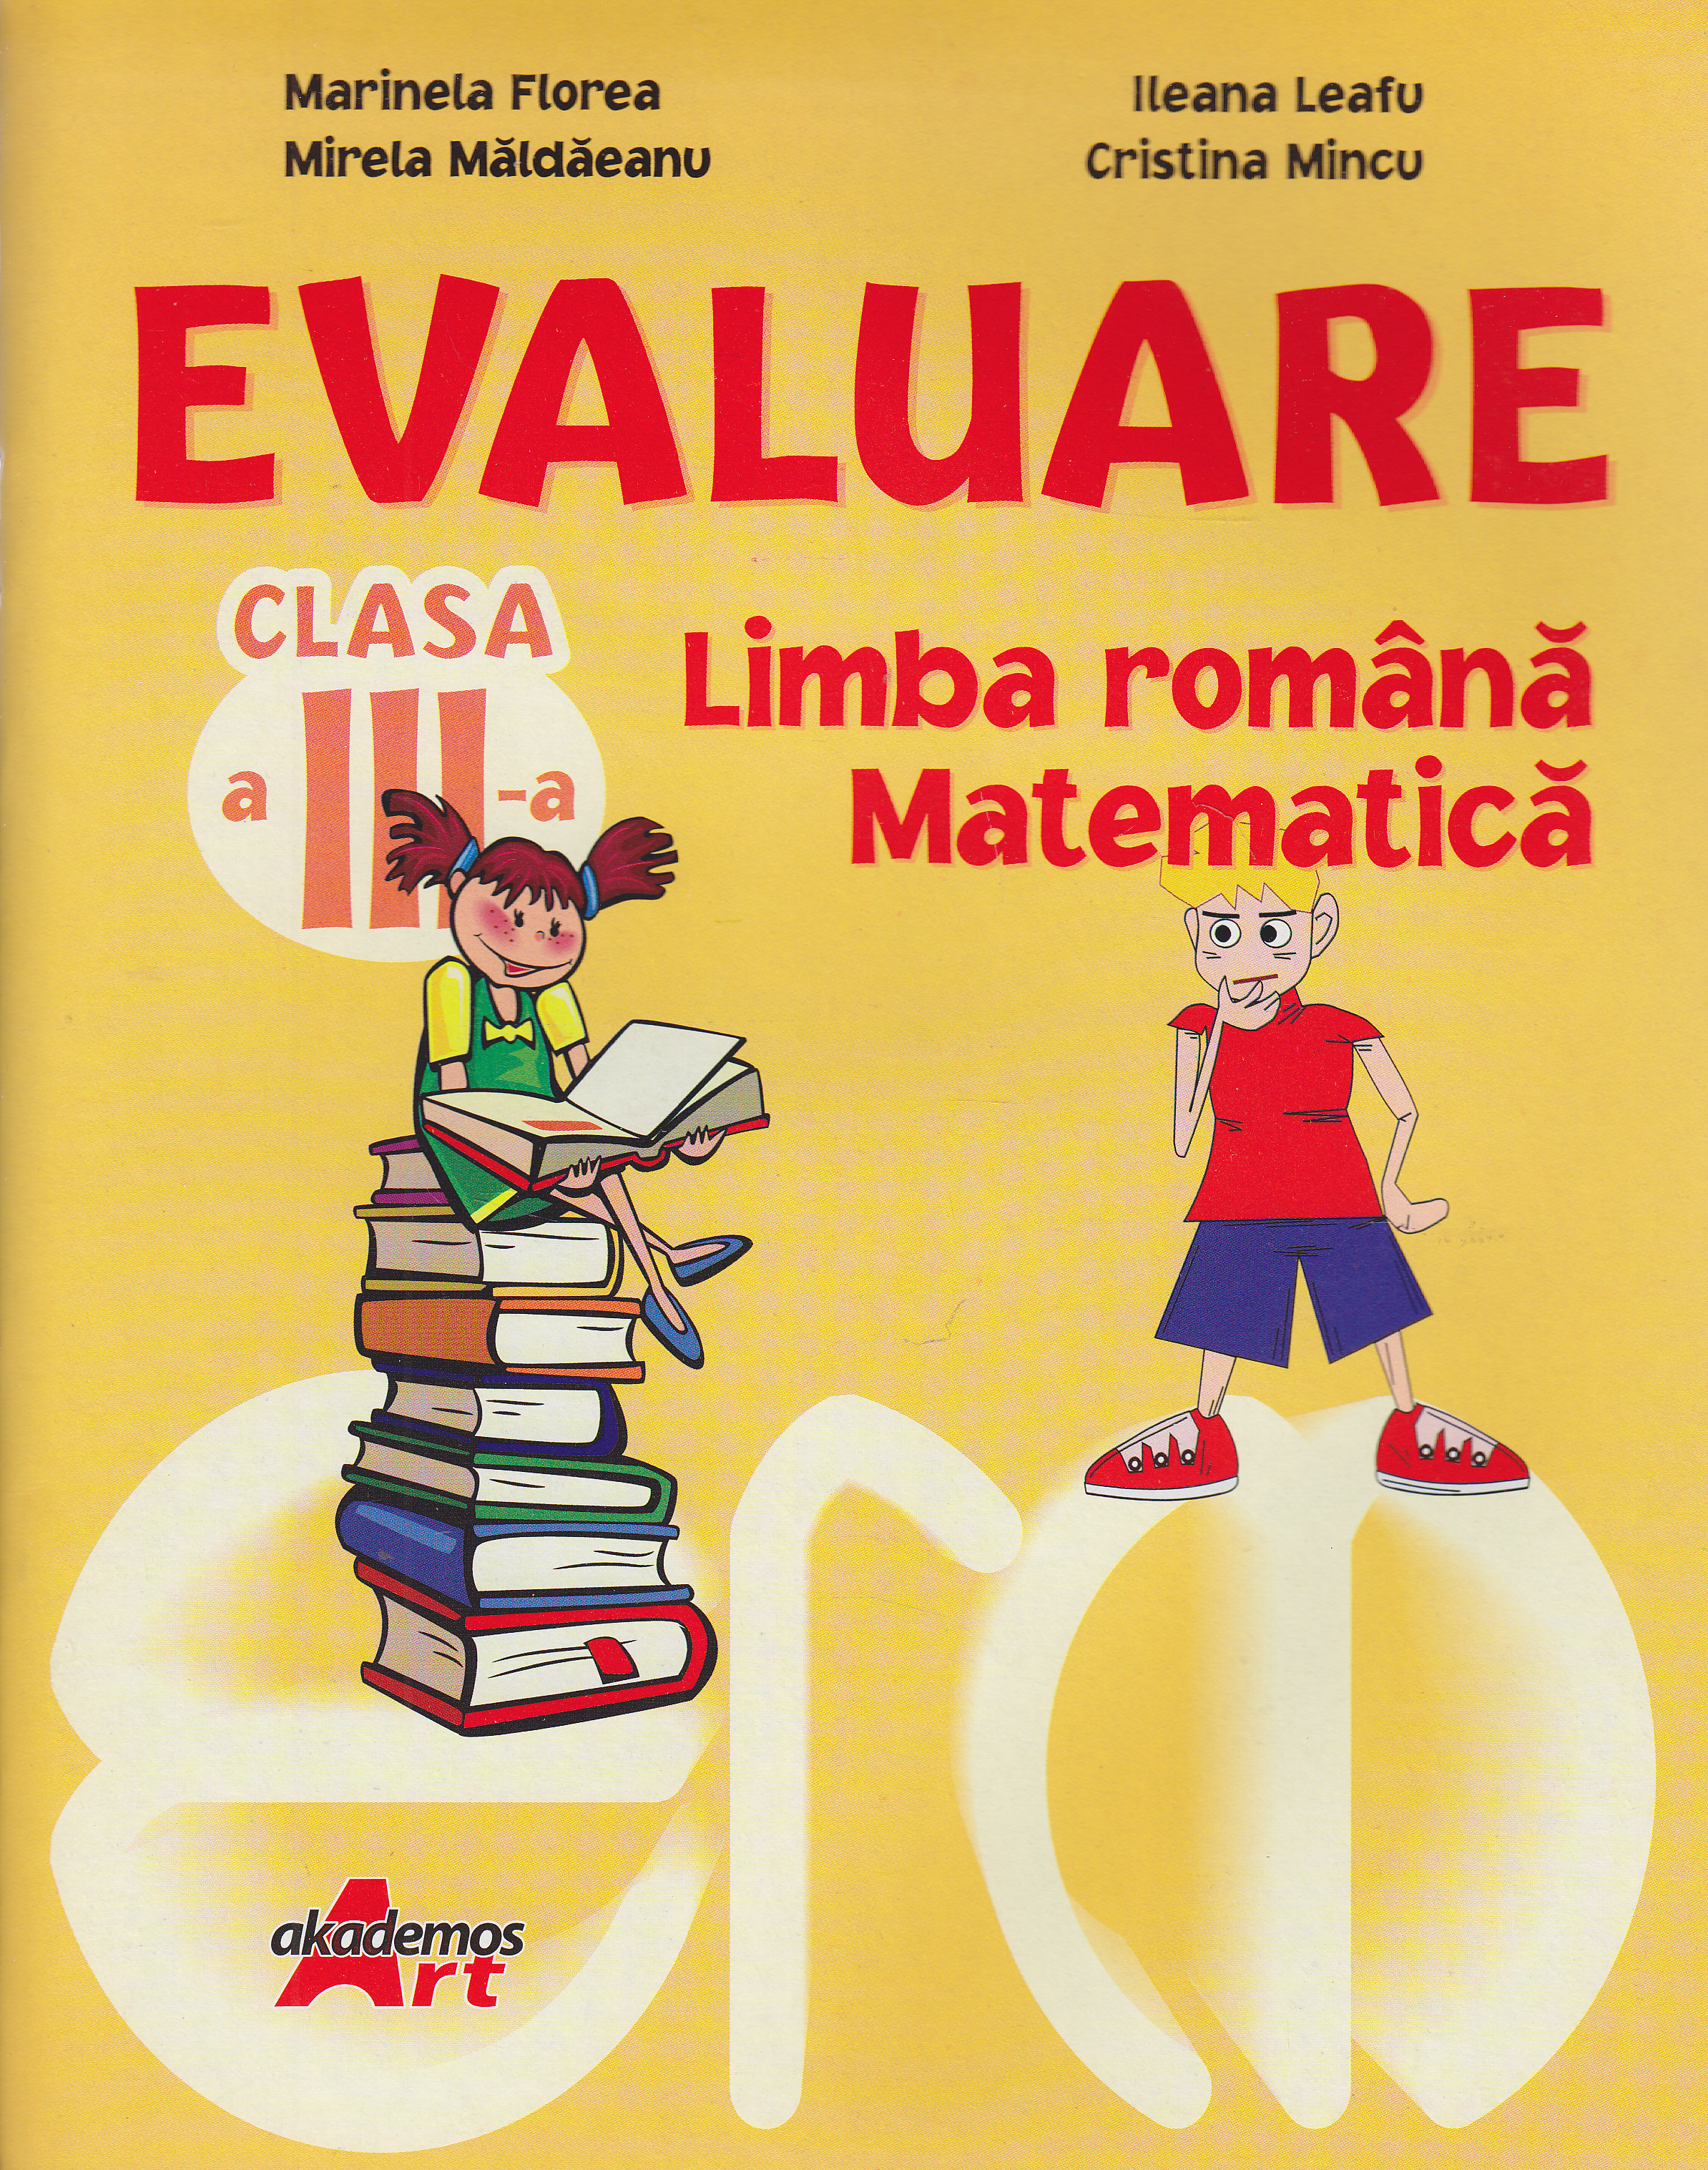 Evaluare cls 3 limba romana, matematica - Marinela Florea, Violeta Ispas, Ileana Leafu